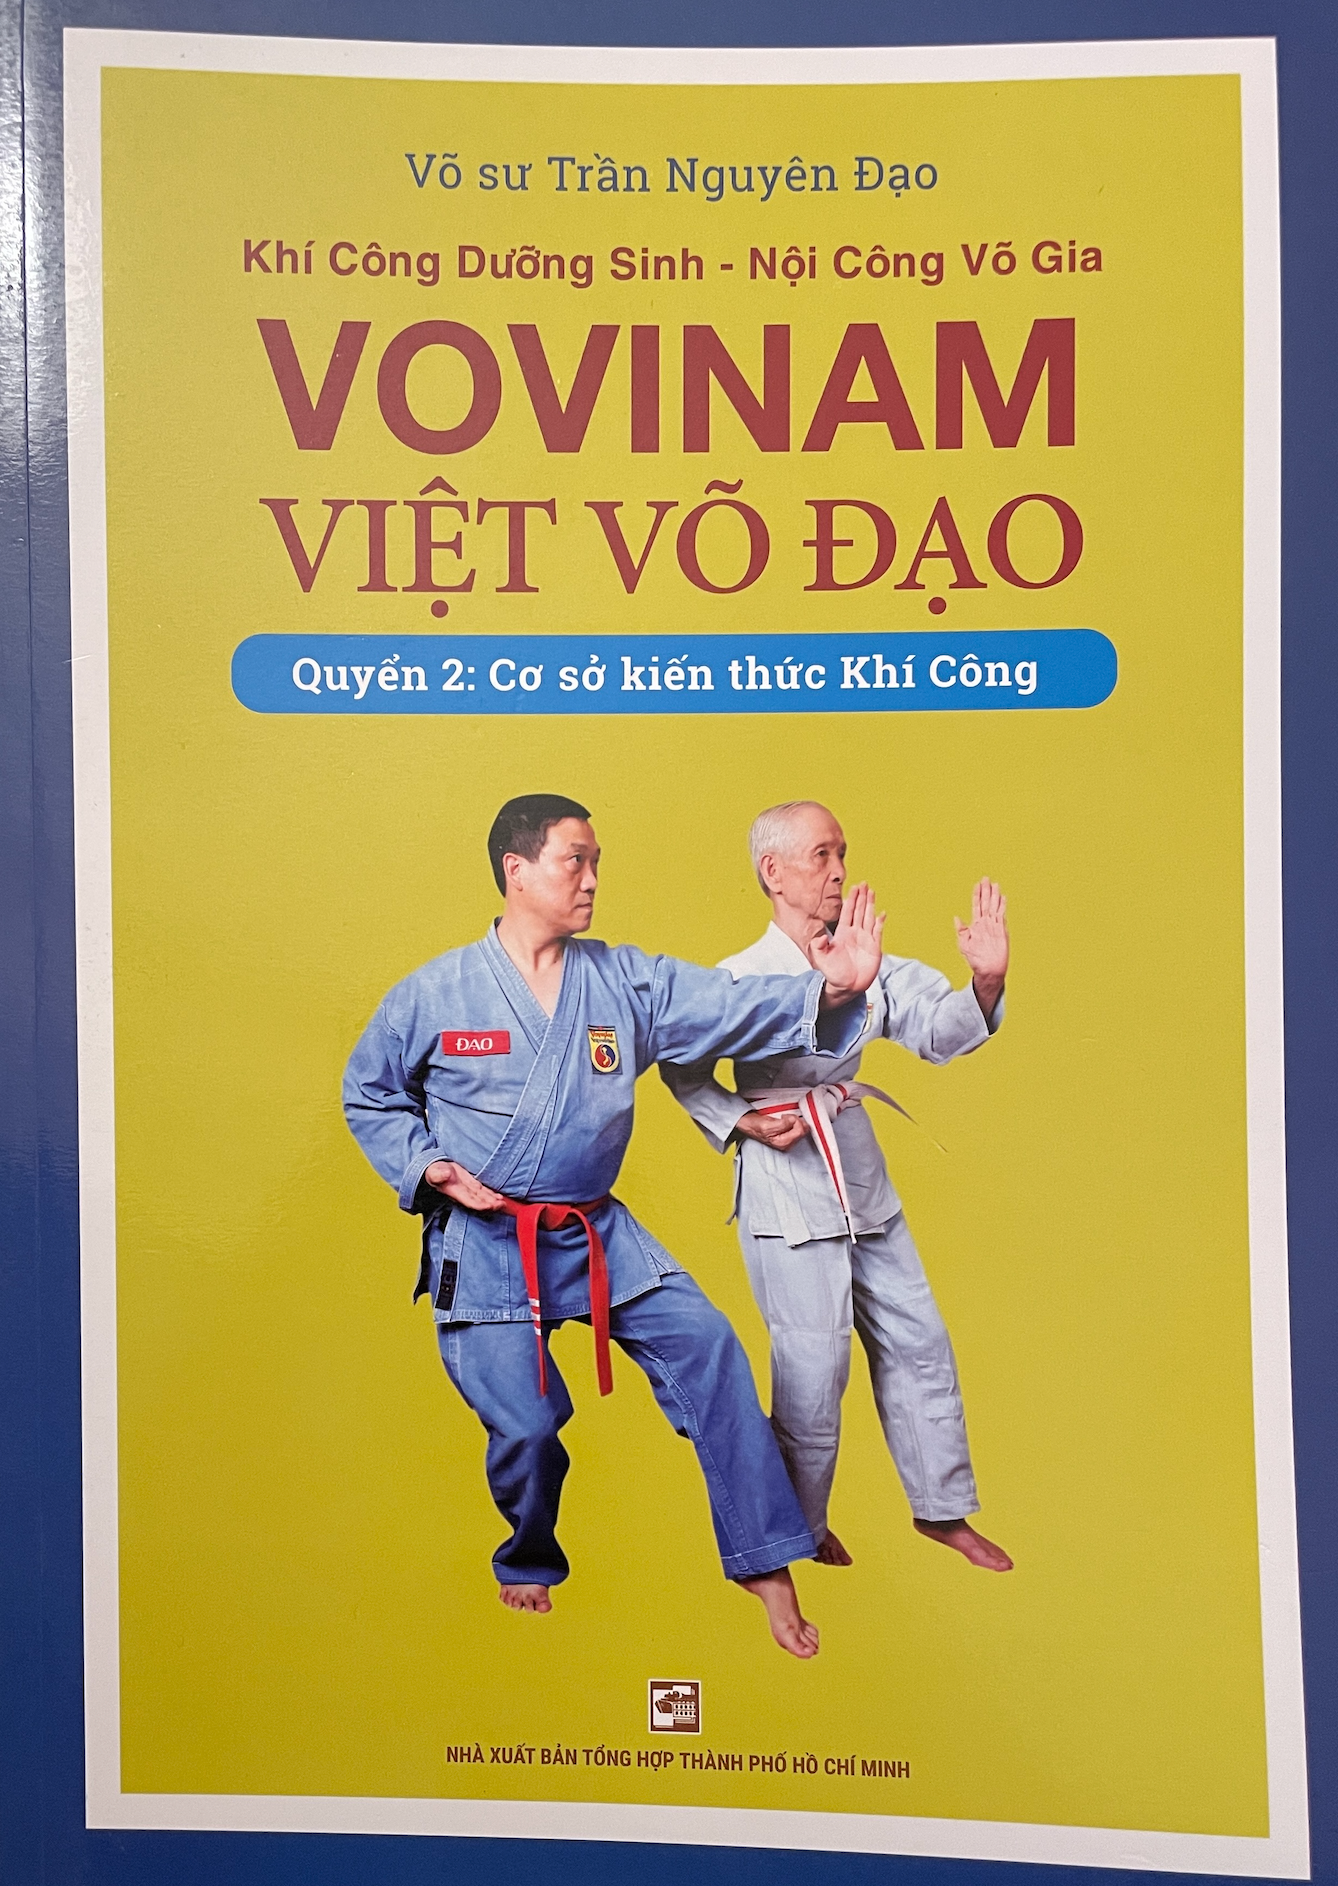 Vovinam Viet Vo Dao Book 2: Qigong Knowledge Base by Tran Nguyen Dao (Vietnamese Language) (Preowned)